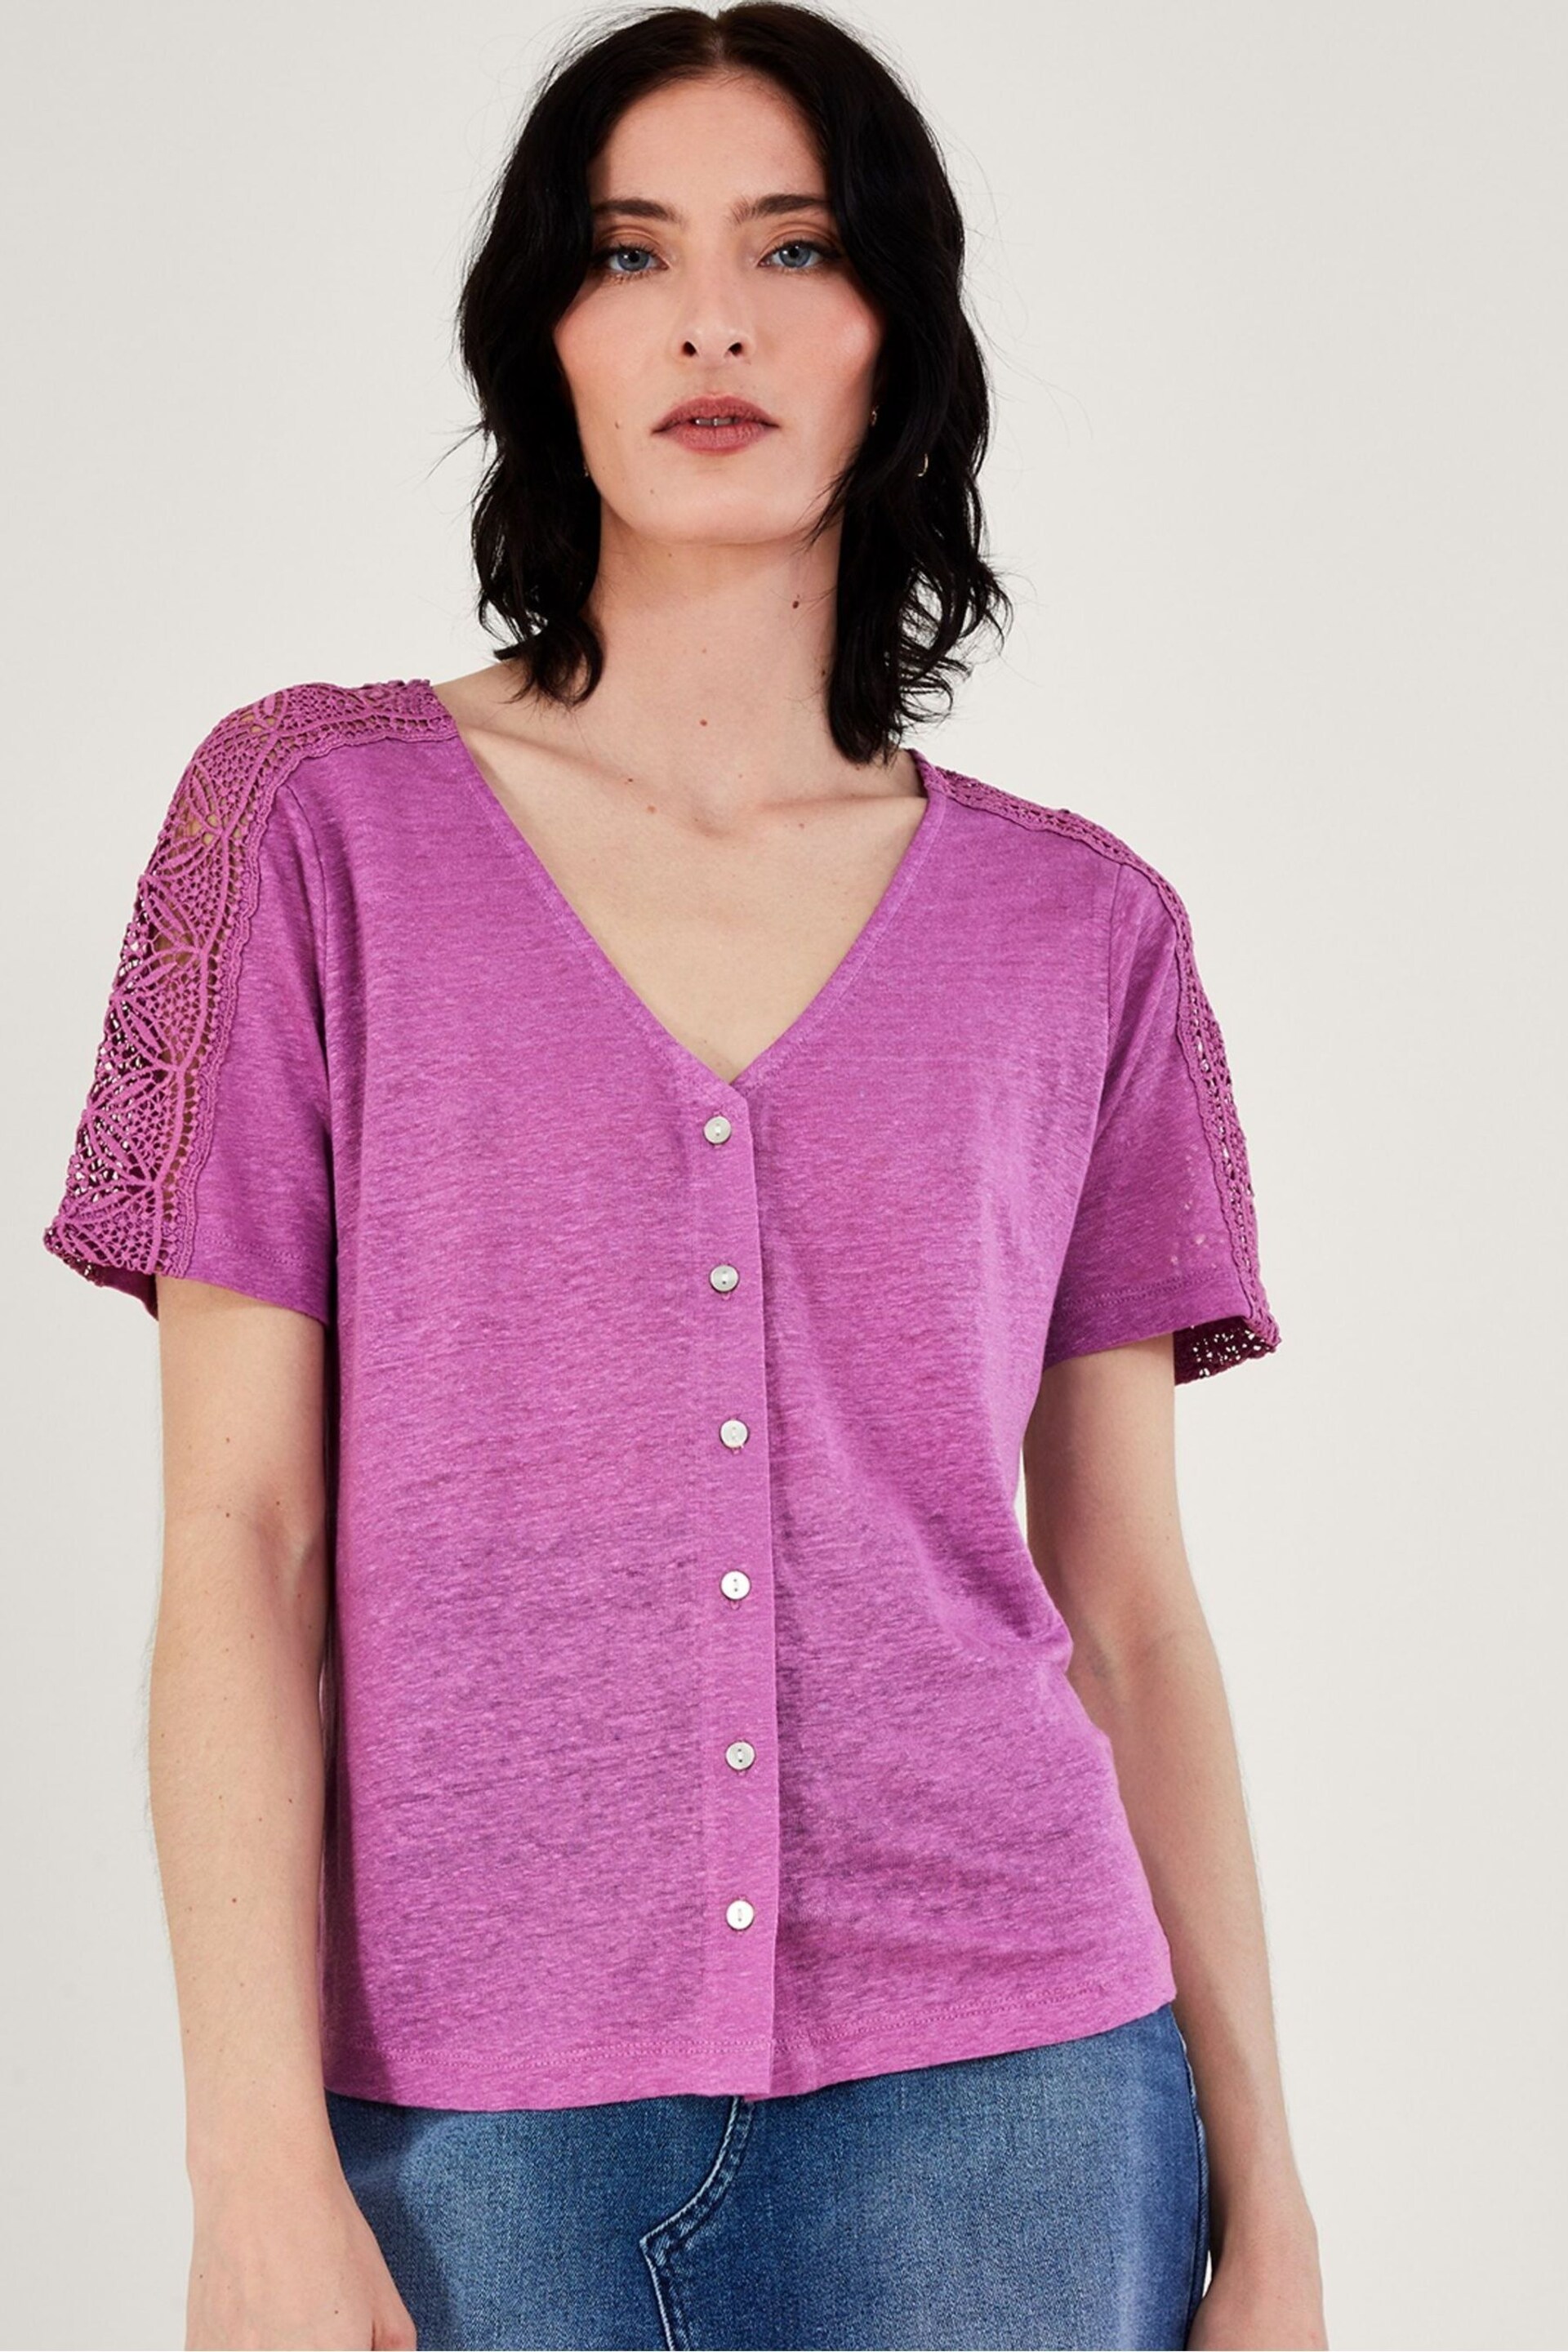 Monsoon Purple Button Through Lace Linen T-Shirt - Image 1 of 4